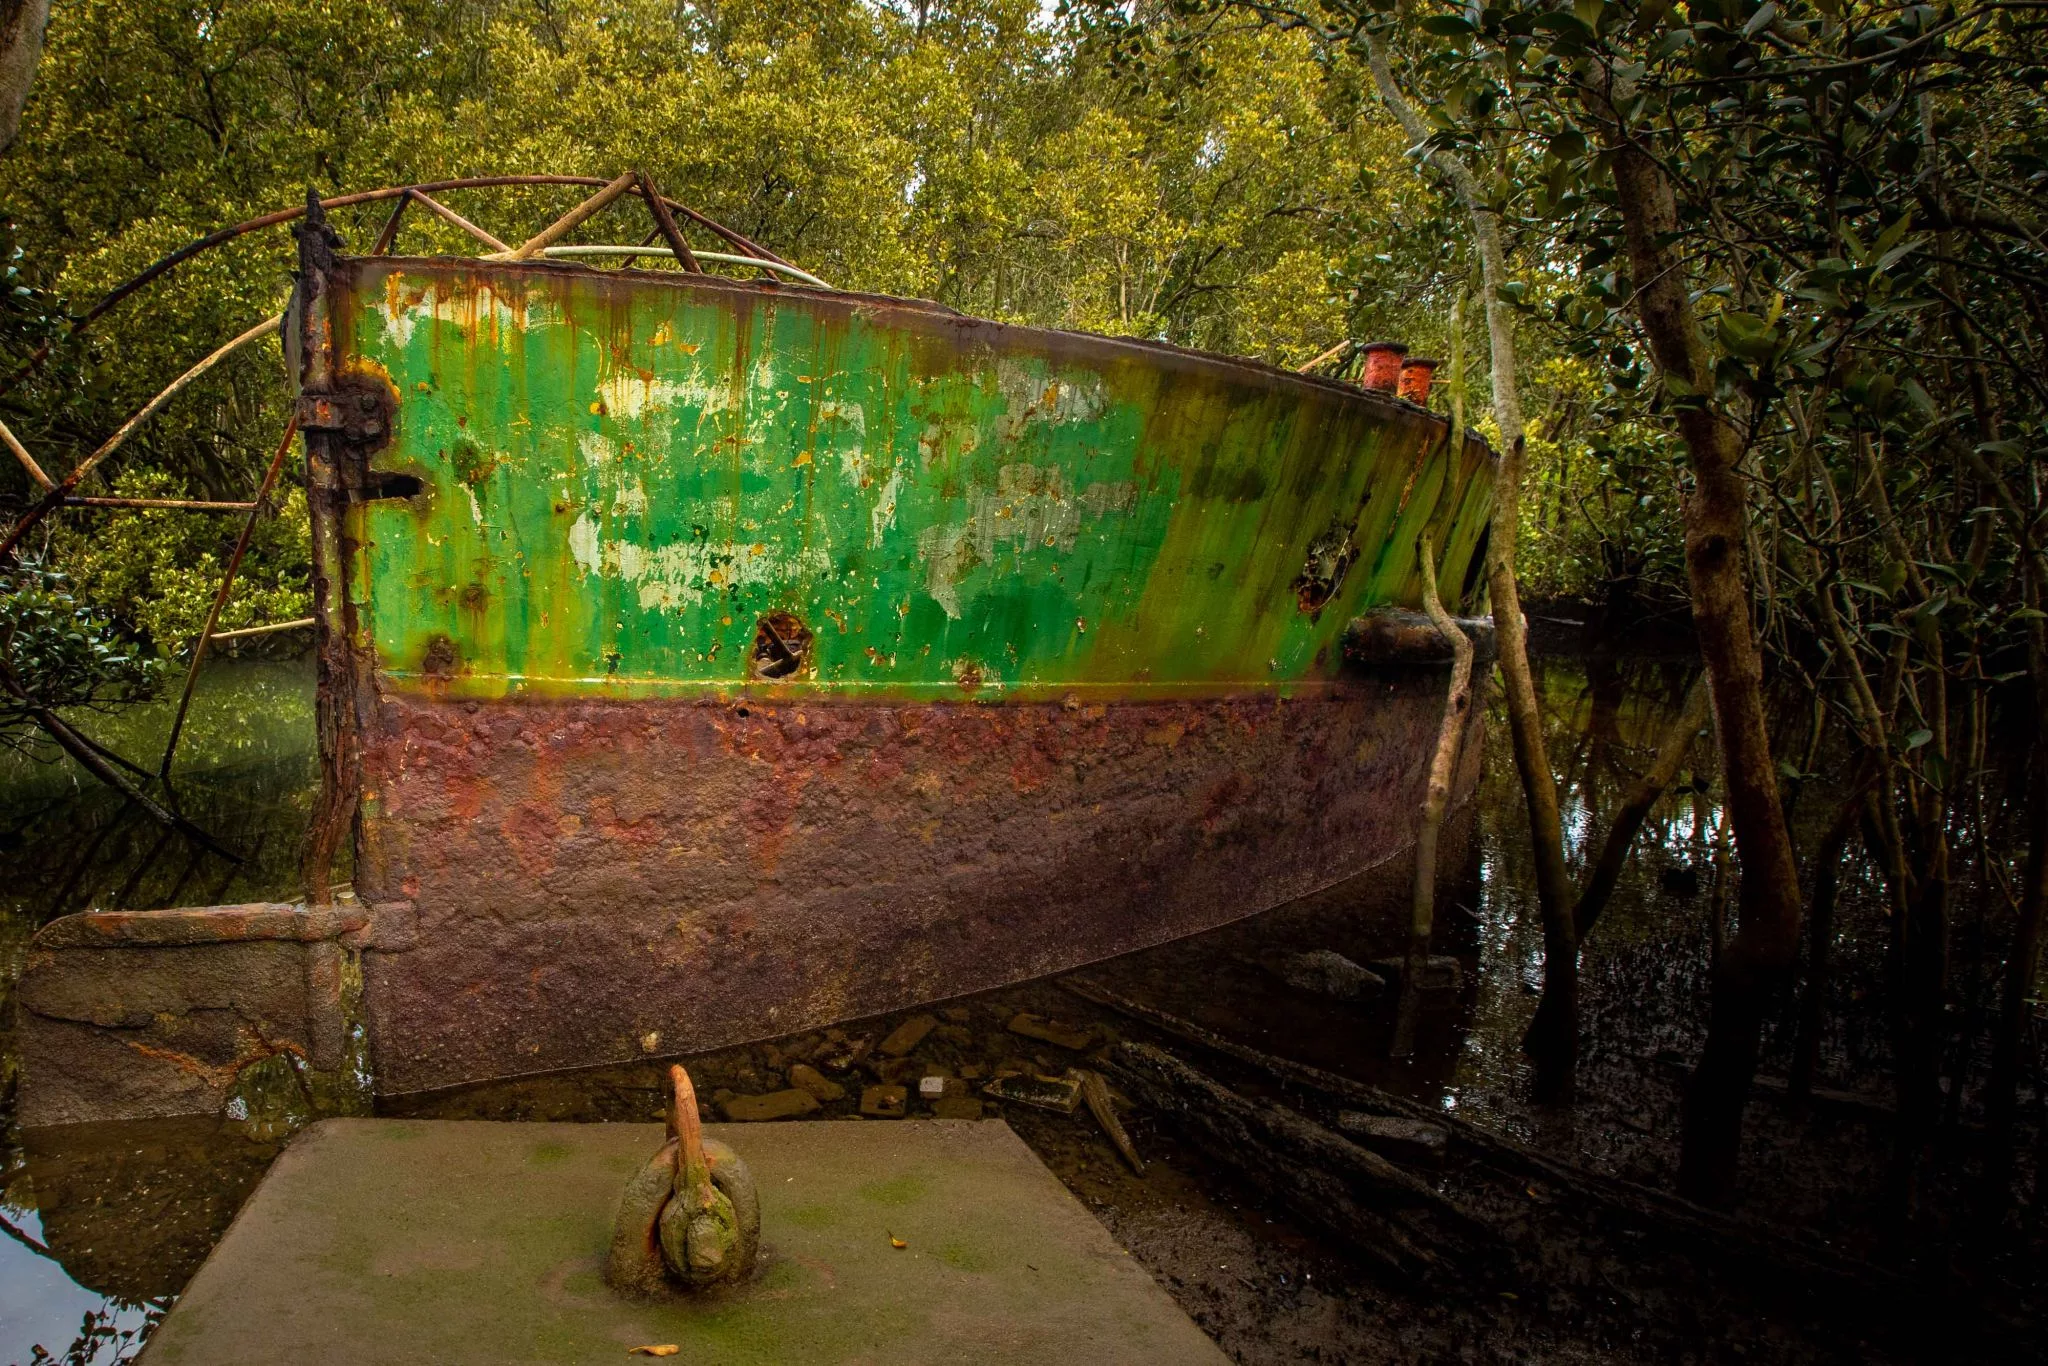 -SS Heroic Shipwreck Homebush New South Wales, Australia